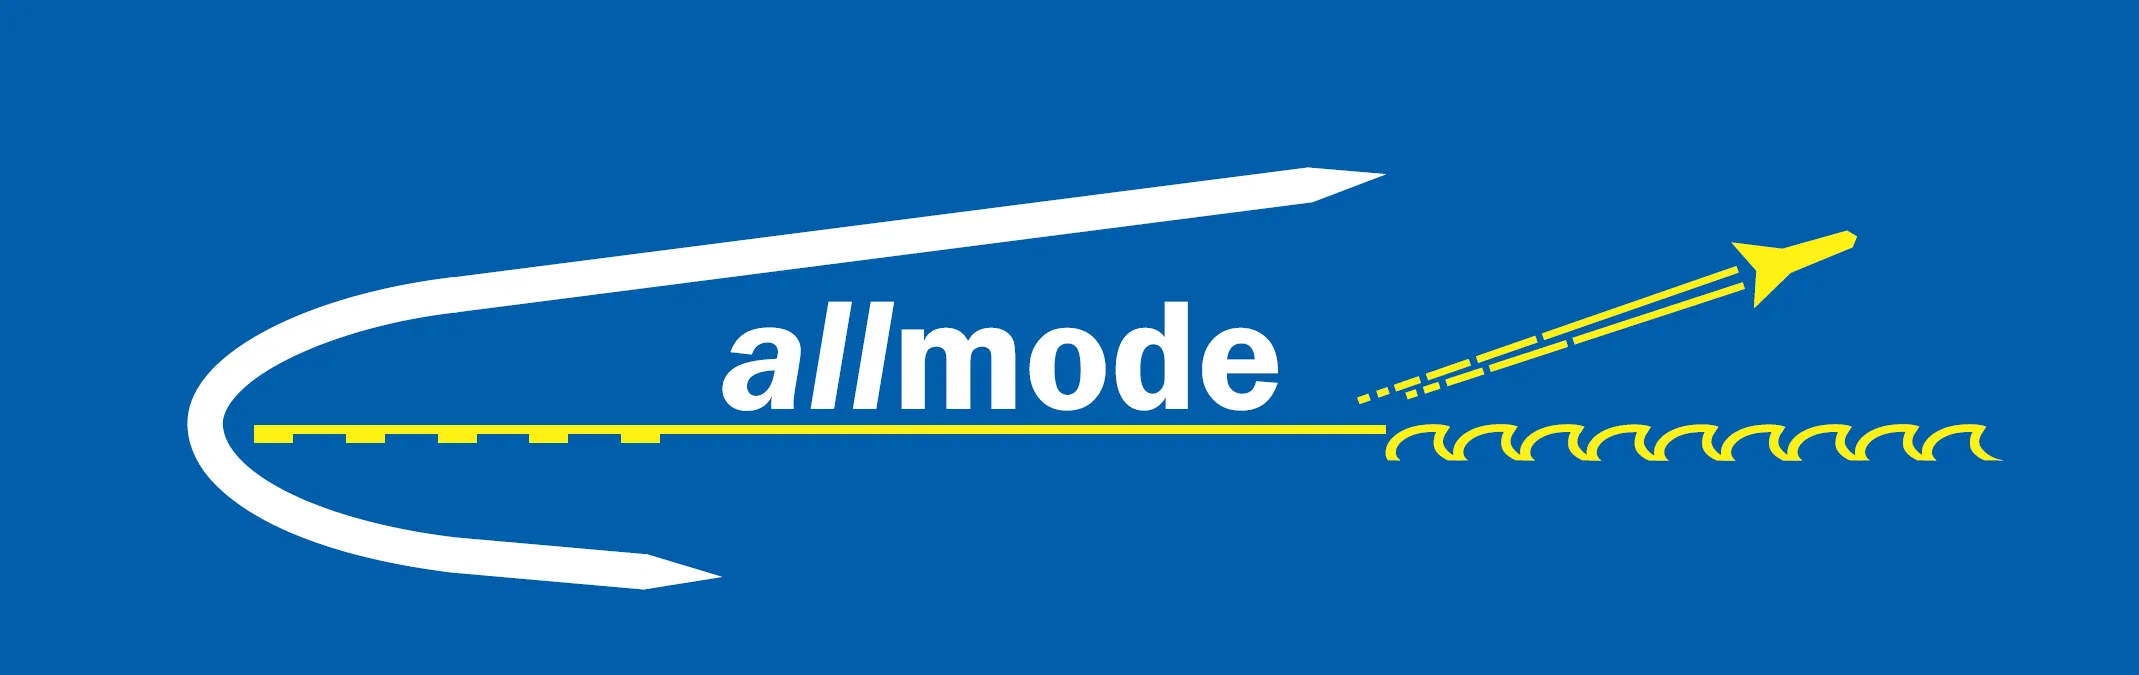 allmode_logo